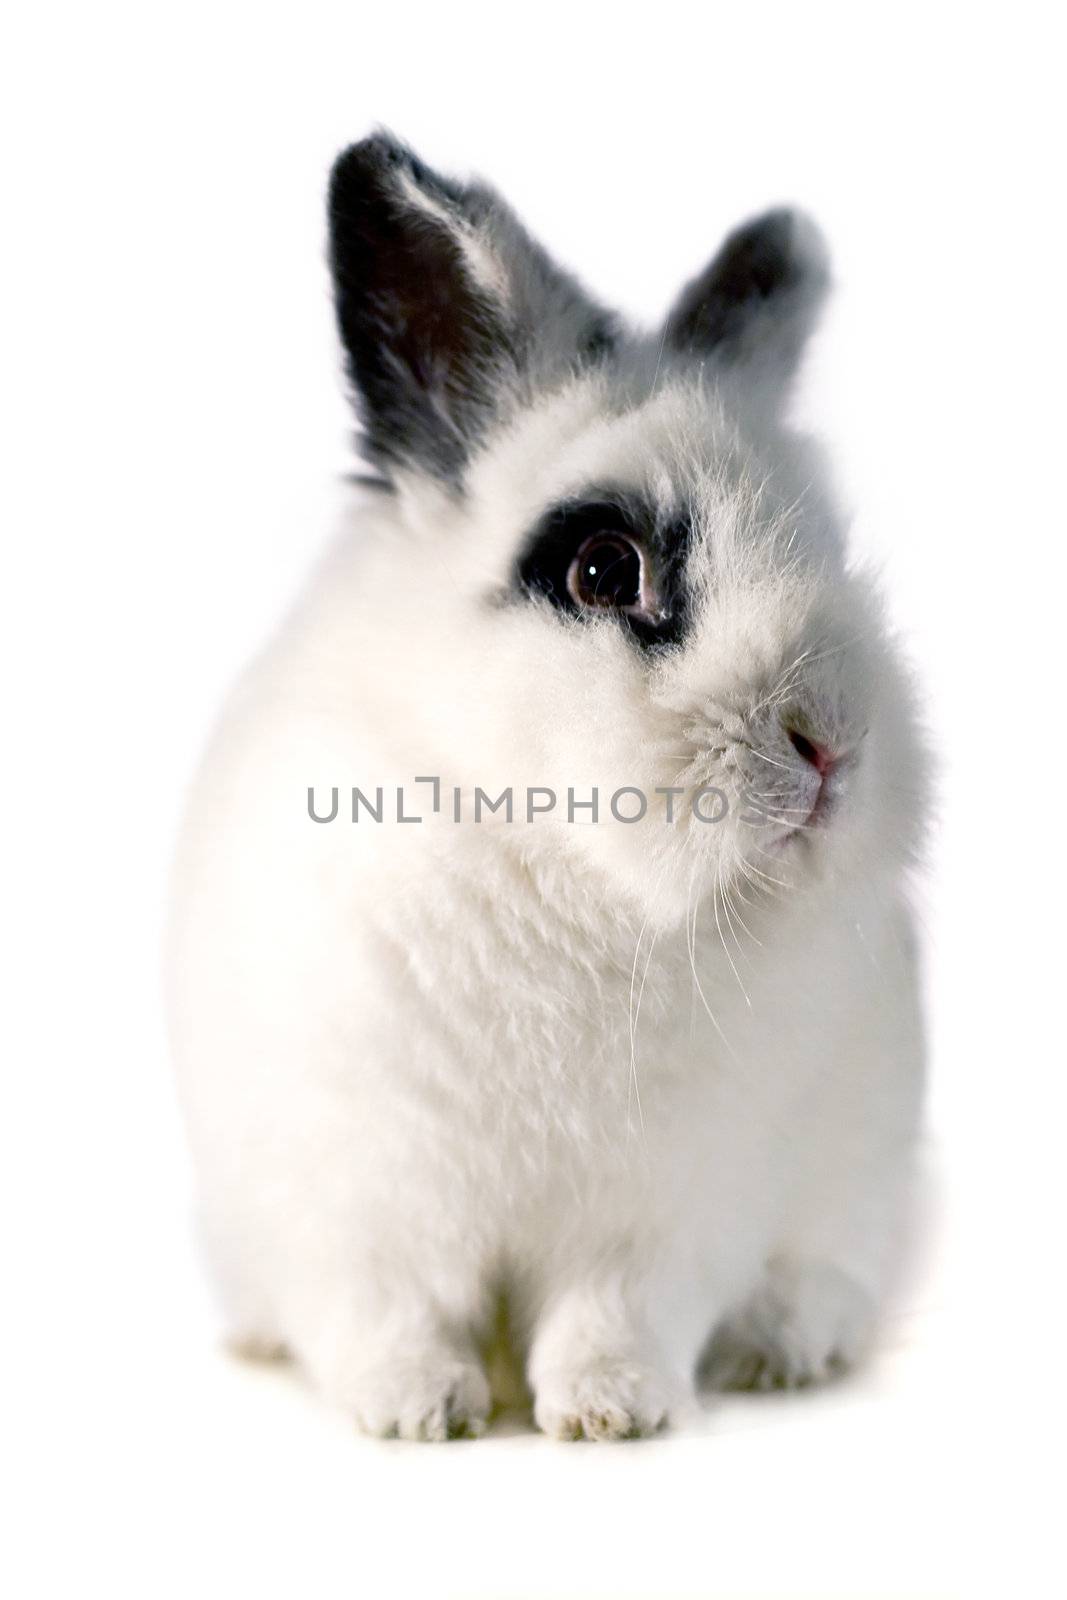 Small Rabbit by PauloResende